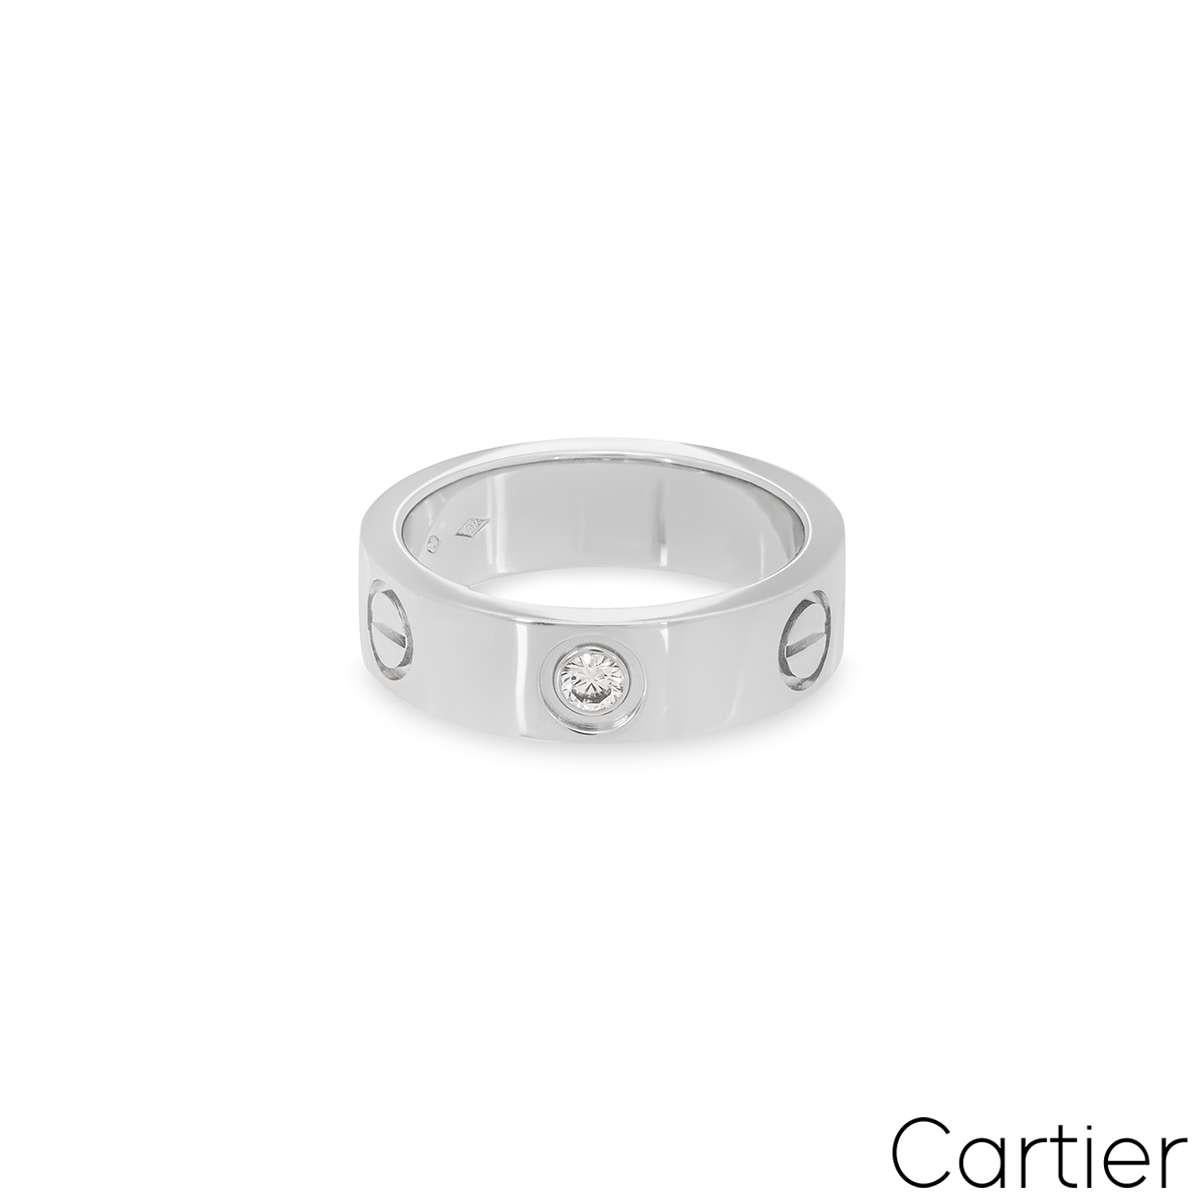 Round Cut Cartier Platinum Diamond Love Ring Size 51 B4046700 For Sale